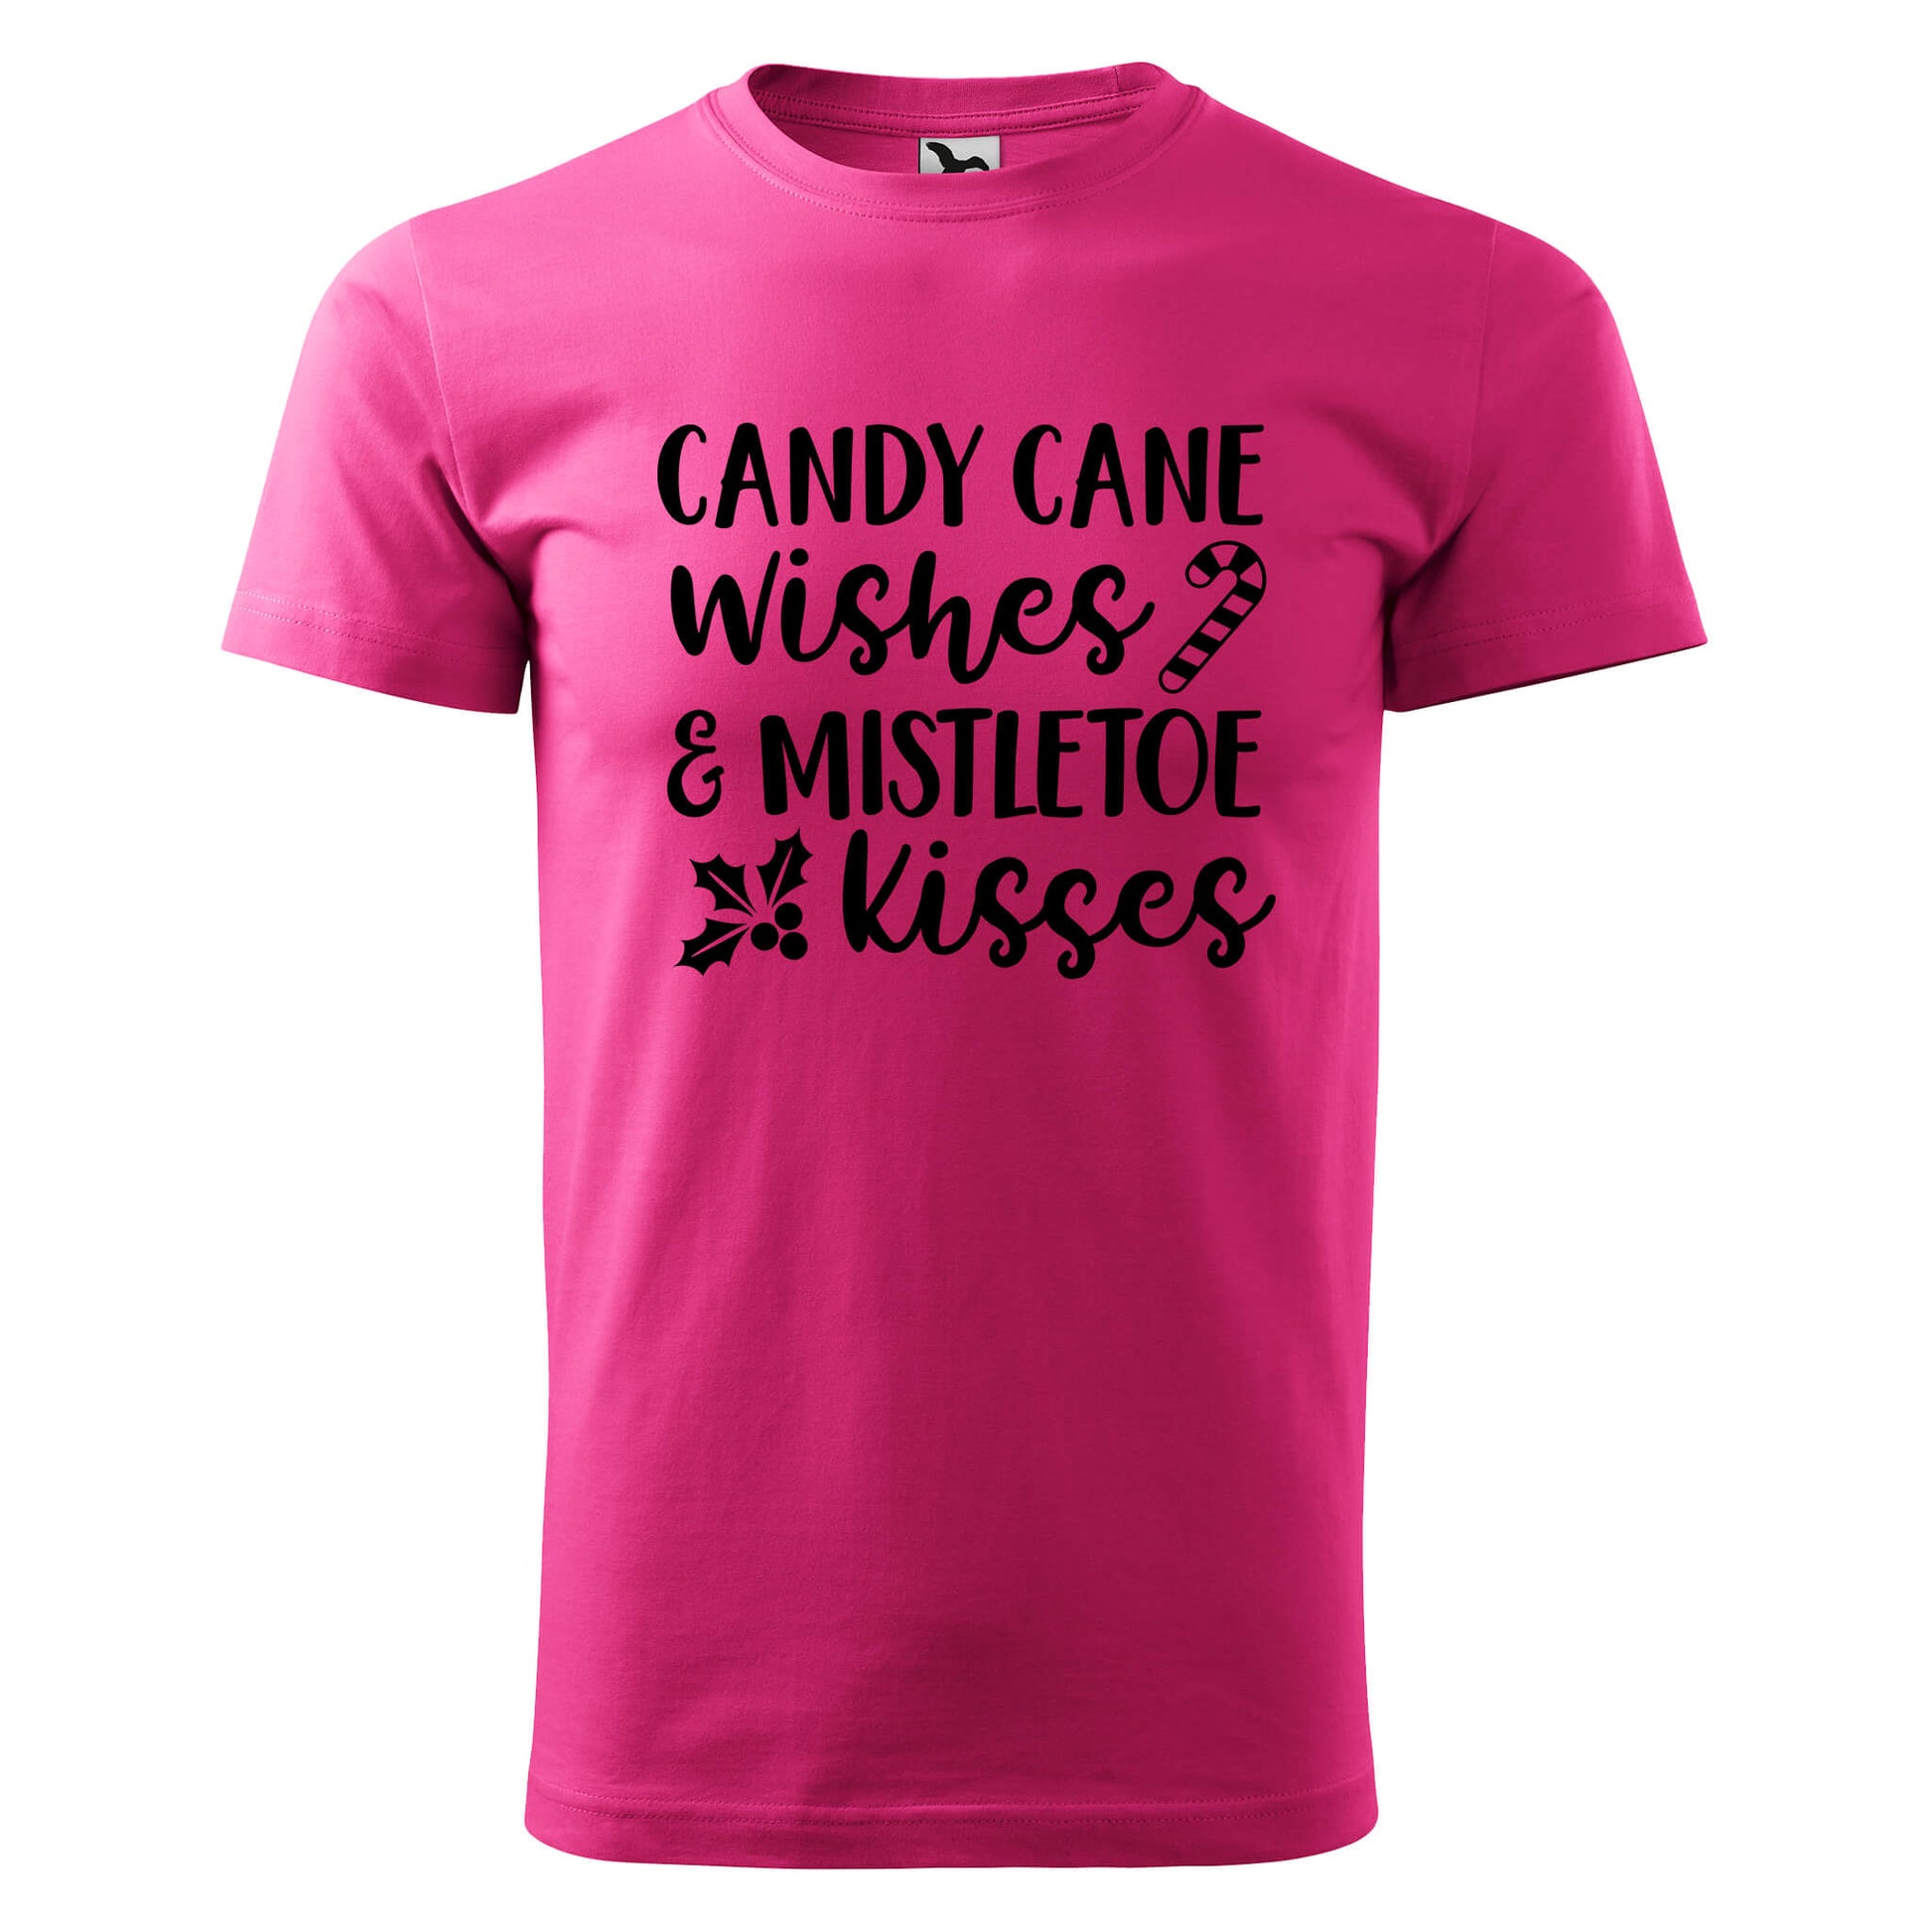 Candy cane wishes mistletoe kisses t-shirt - rvdesignprint